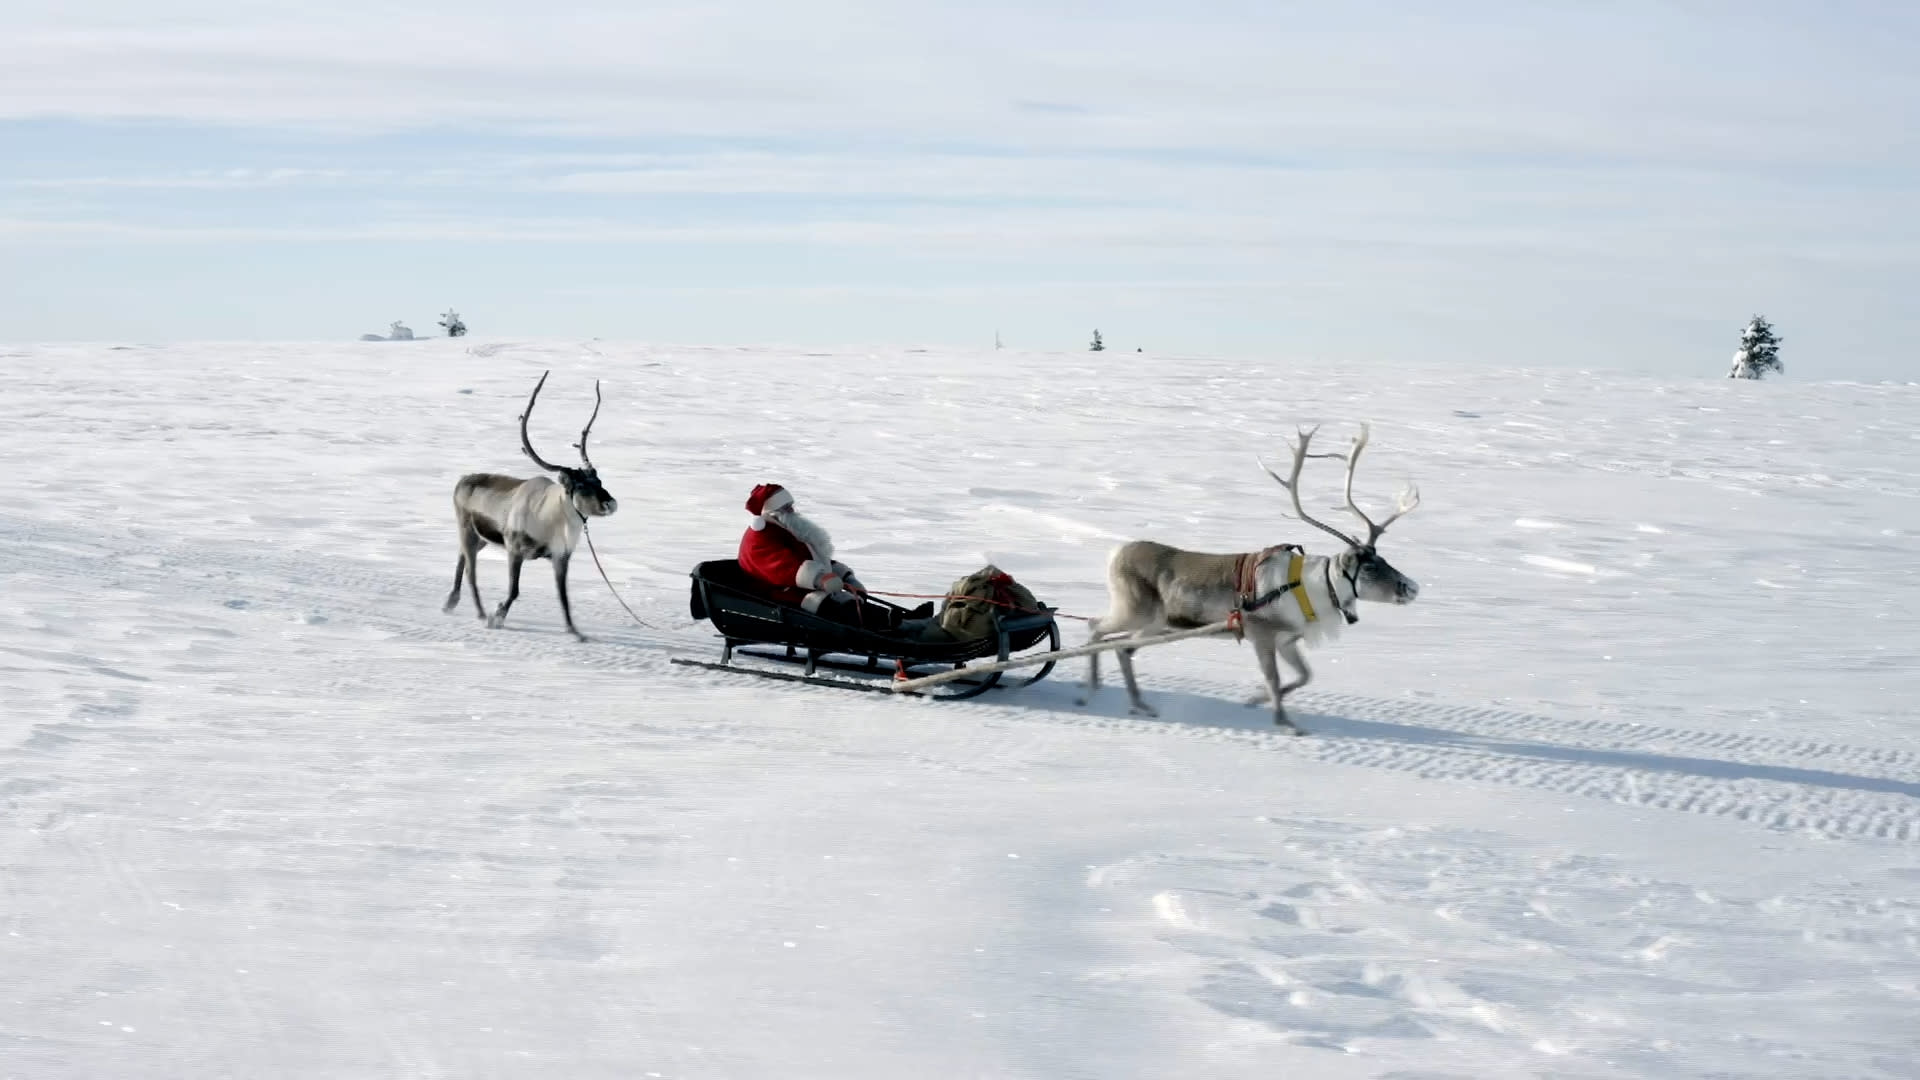 See: Santa Claus leaves Lapland